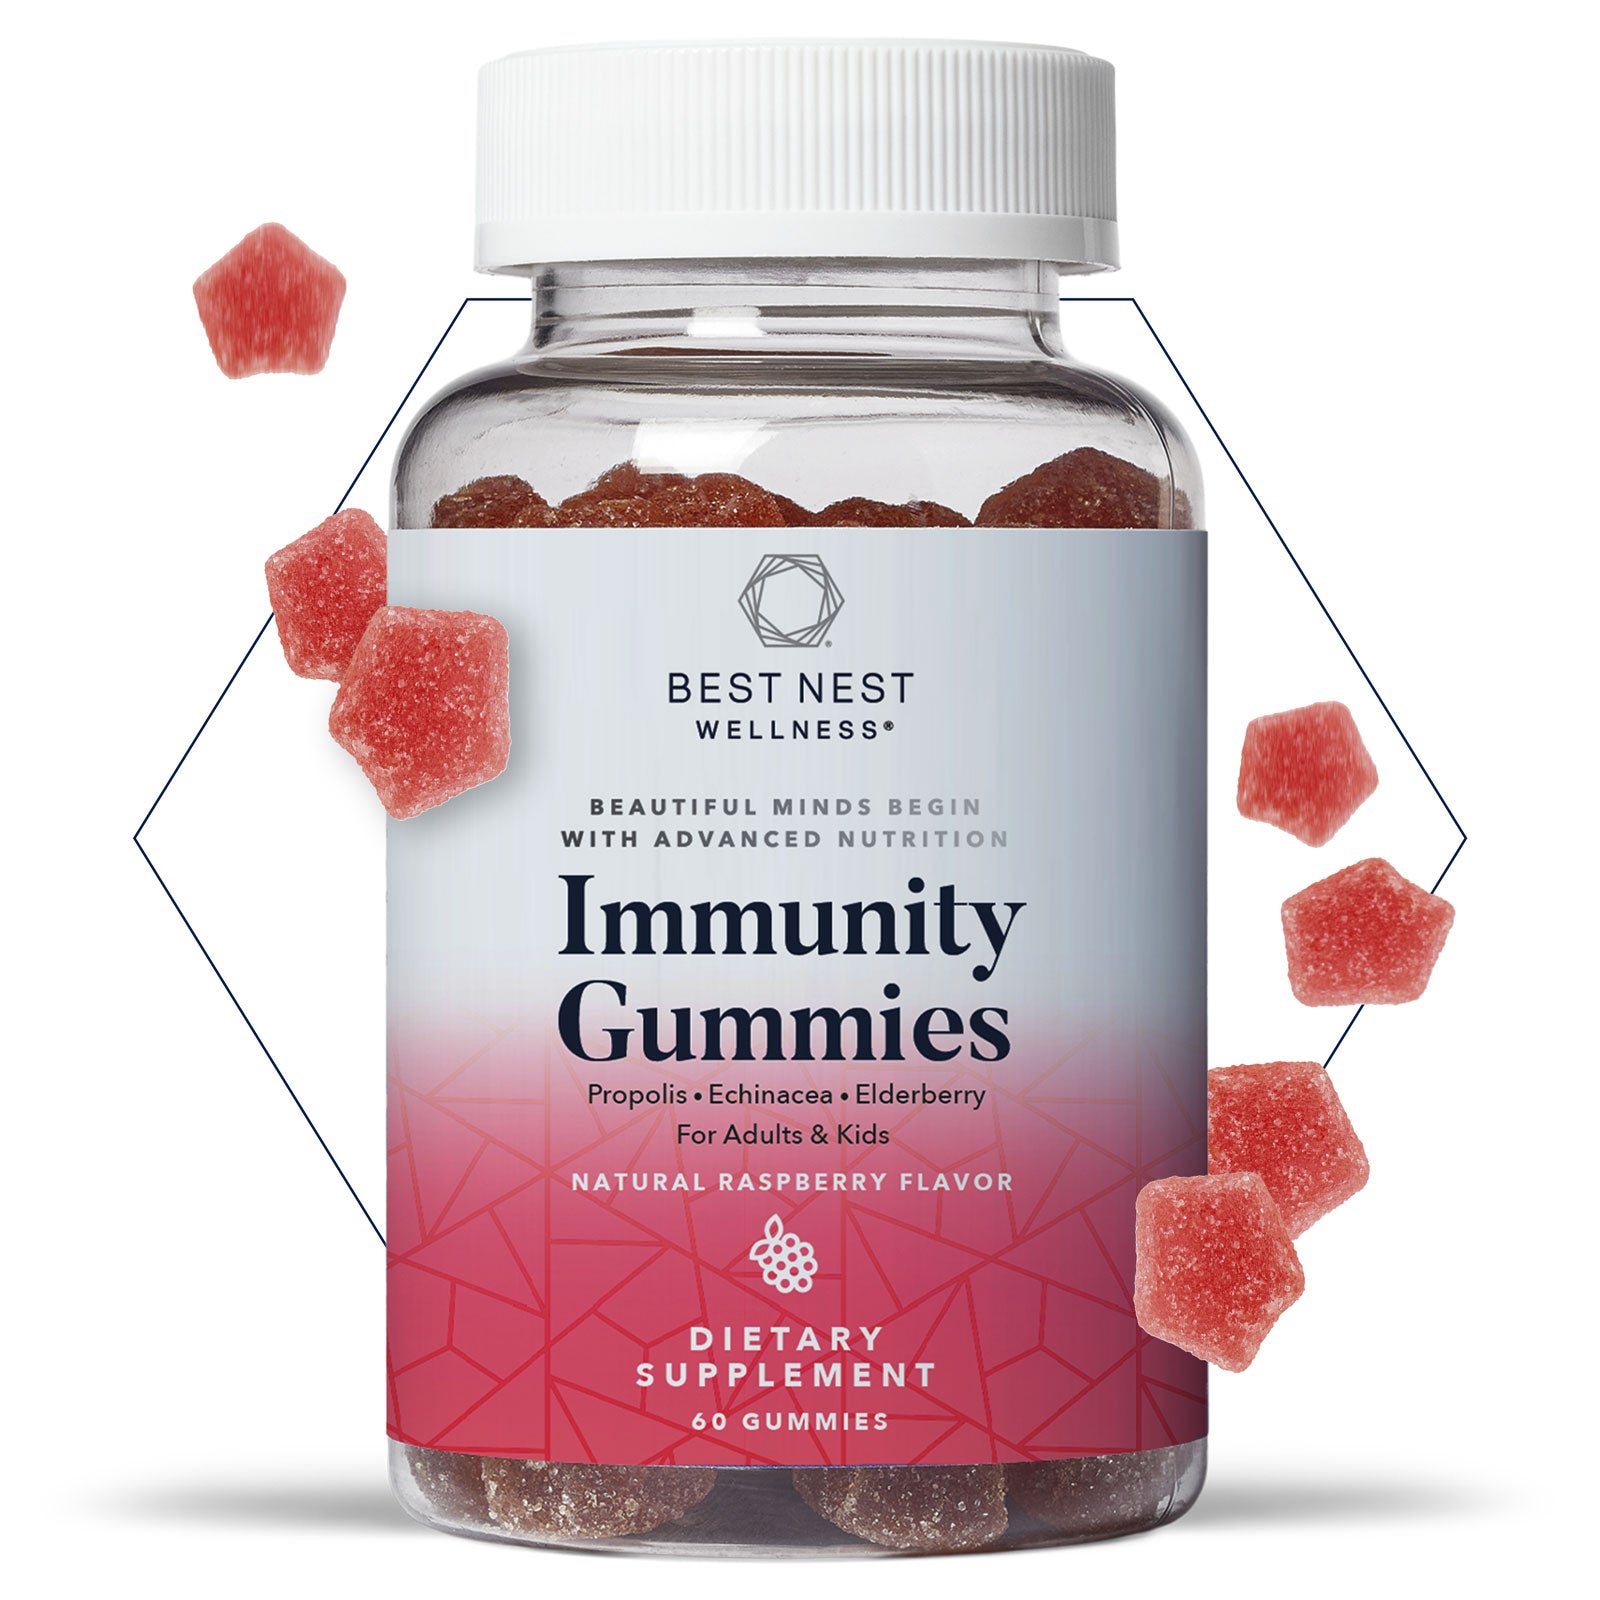 Best Nest Immunity Gummies